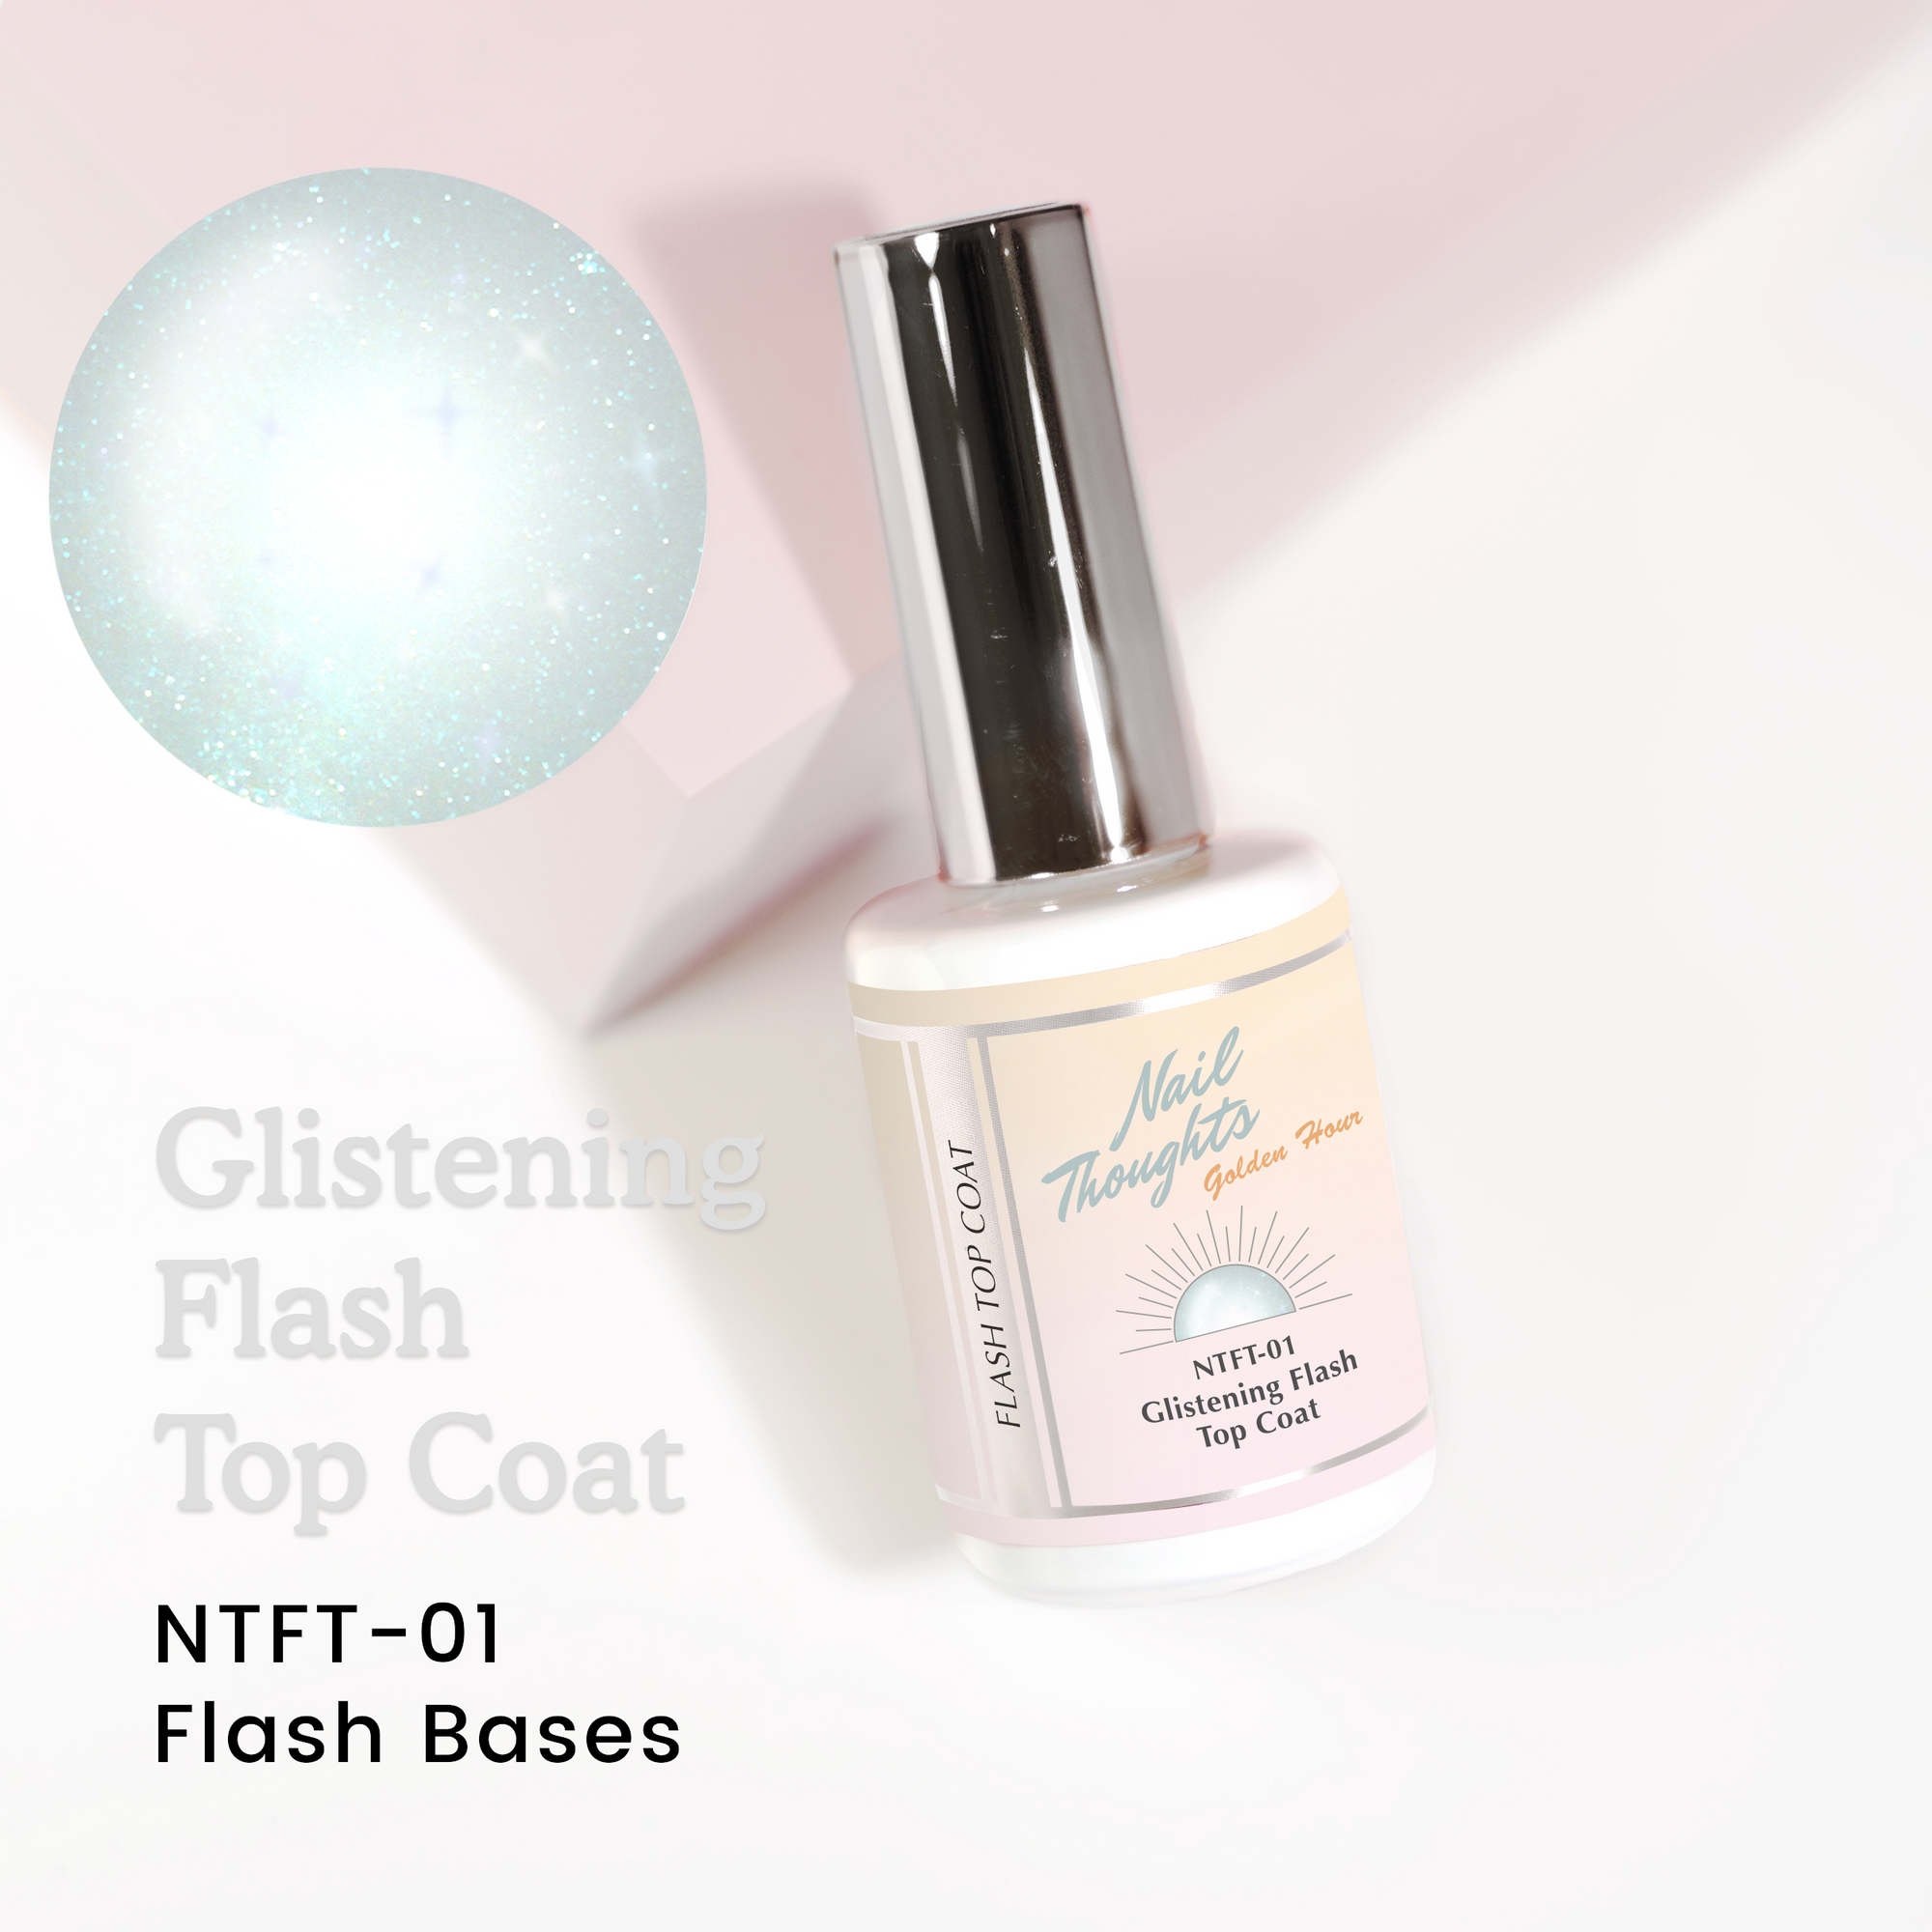 Glistening Flash Top Coat NTFT-01